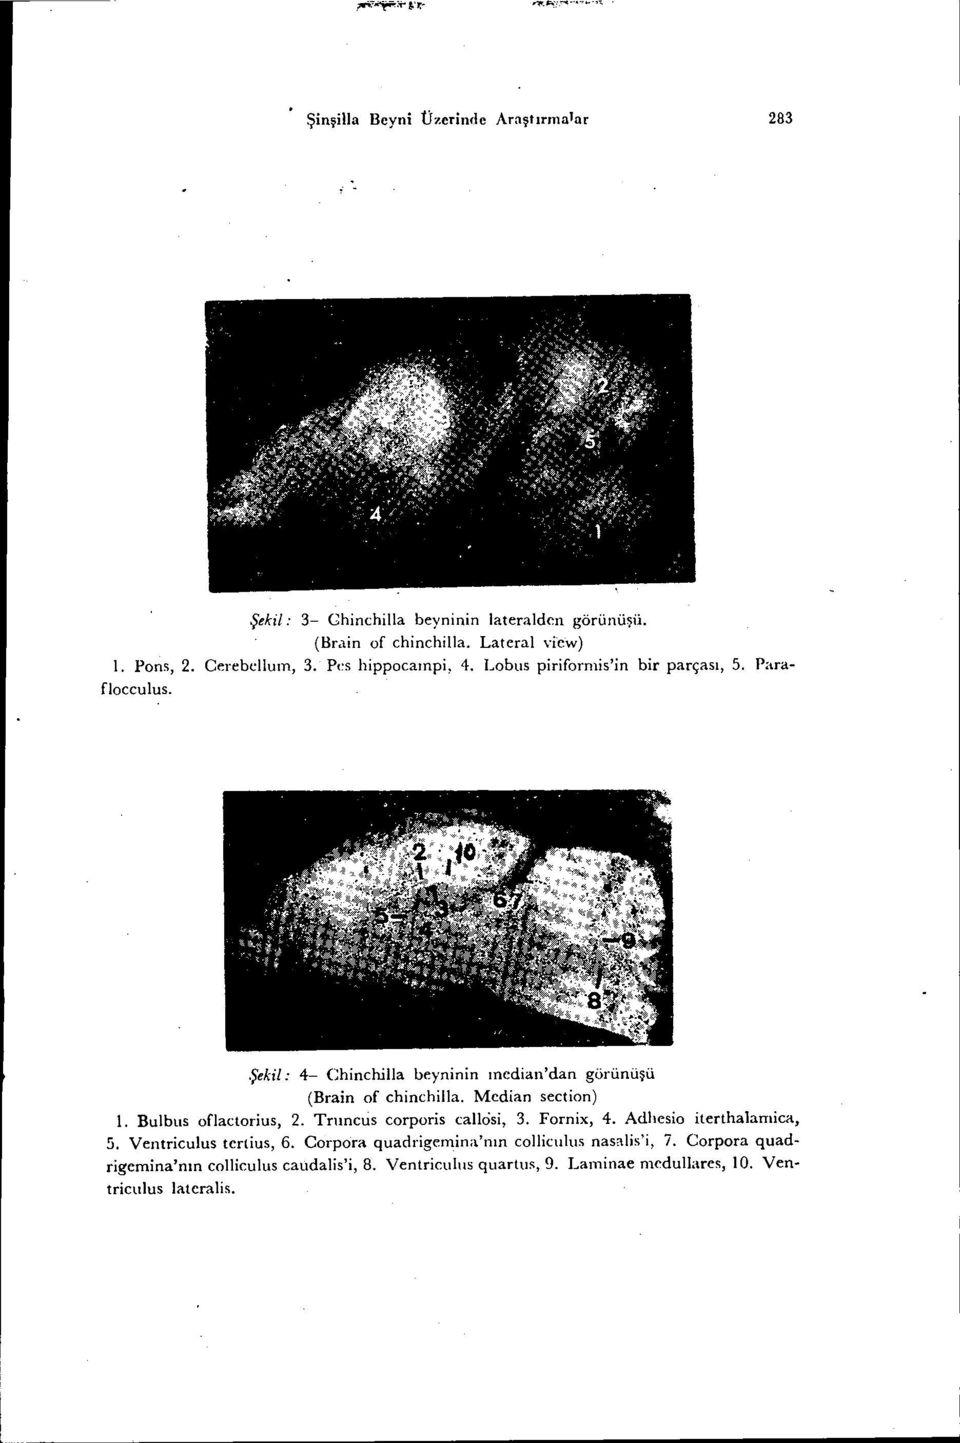 Şekil: 4- Chinchilla beyninin median'dan görünüşü (Brain of chinchilla. Median section) ı. Bulbus oflactorius, 2. Trııncus corporis callôsi, 3.